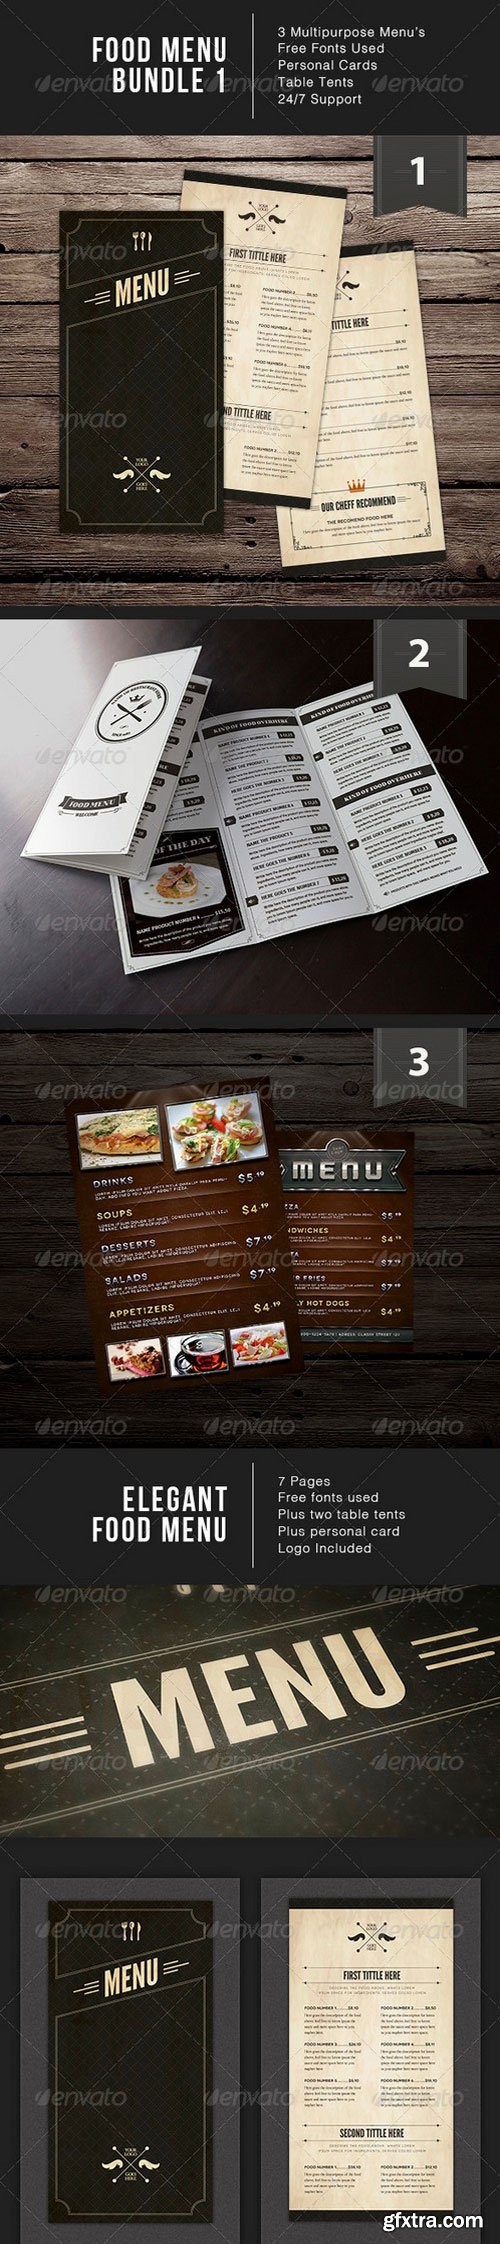 Graphicriver - Food Menu Bundle 1 7068035